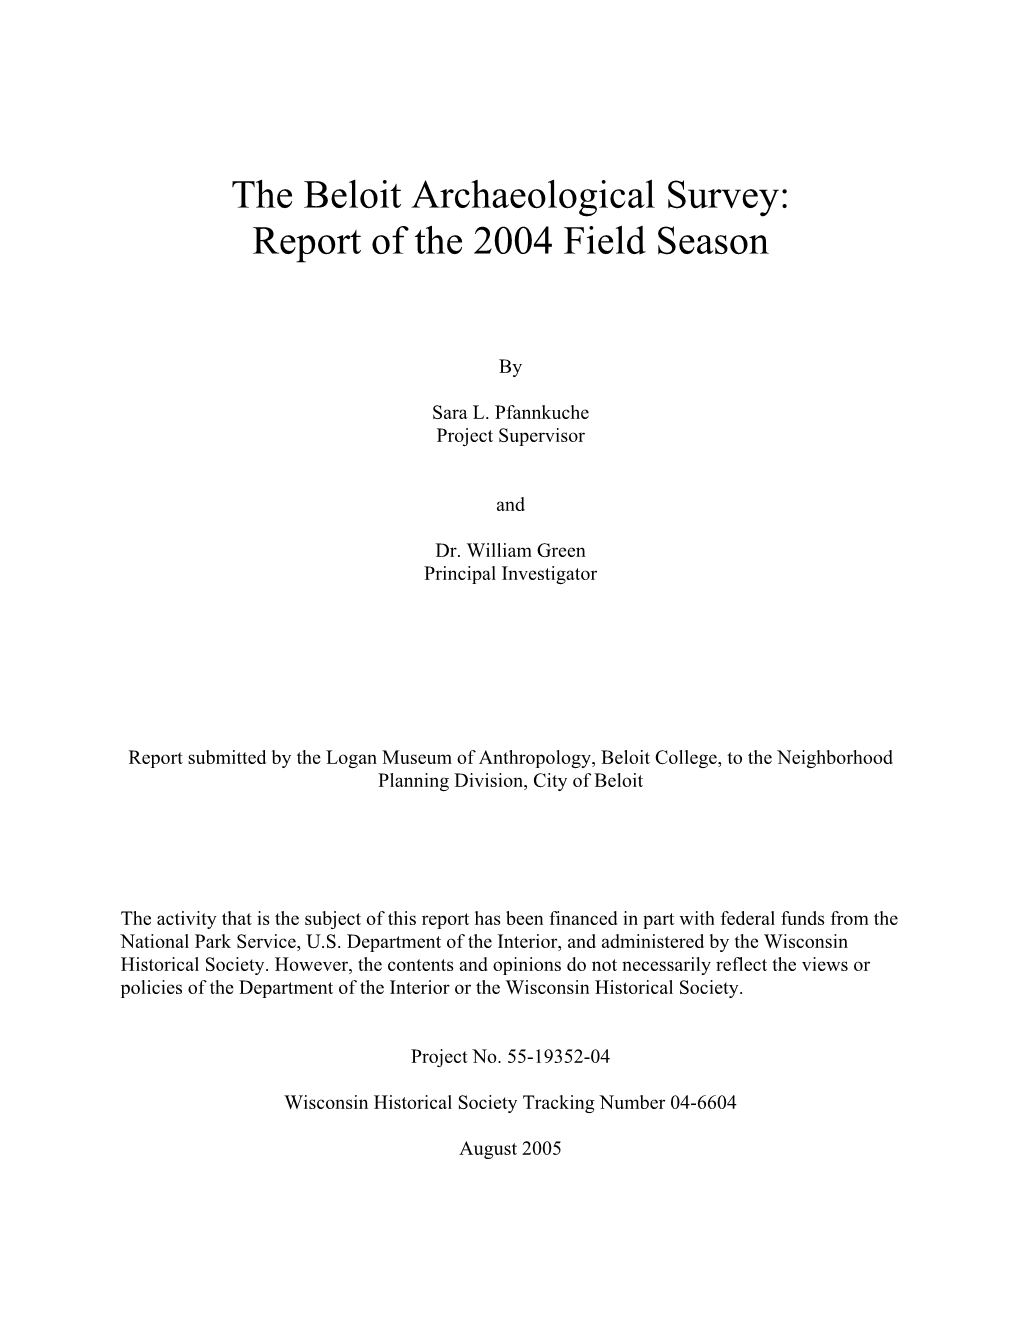 The Beloit Archaeological Survey: Report of the 2004 Field Season